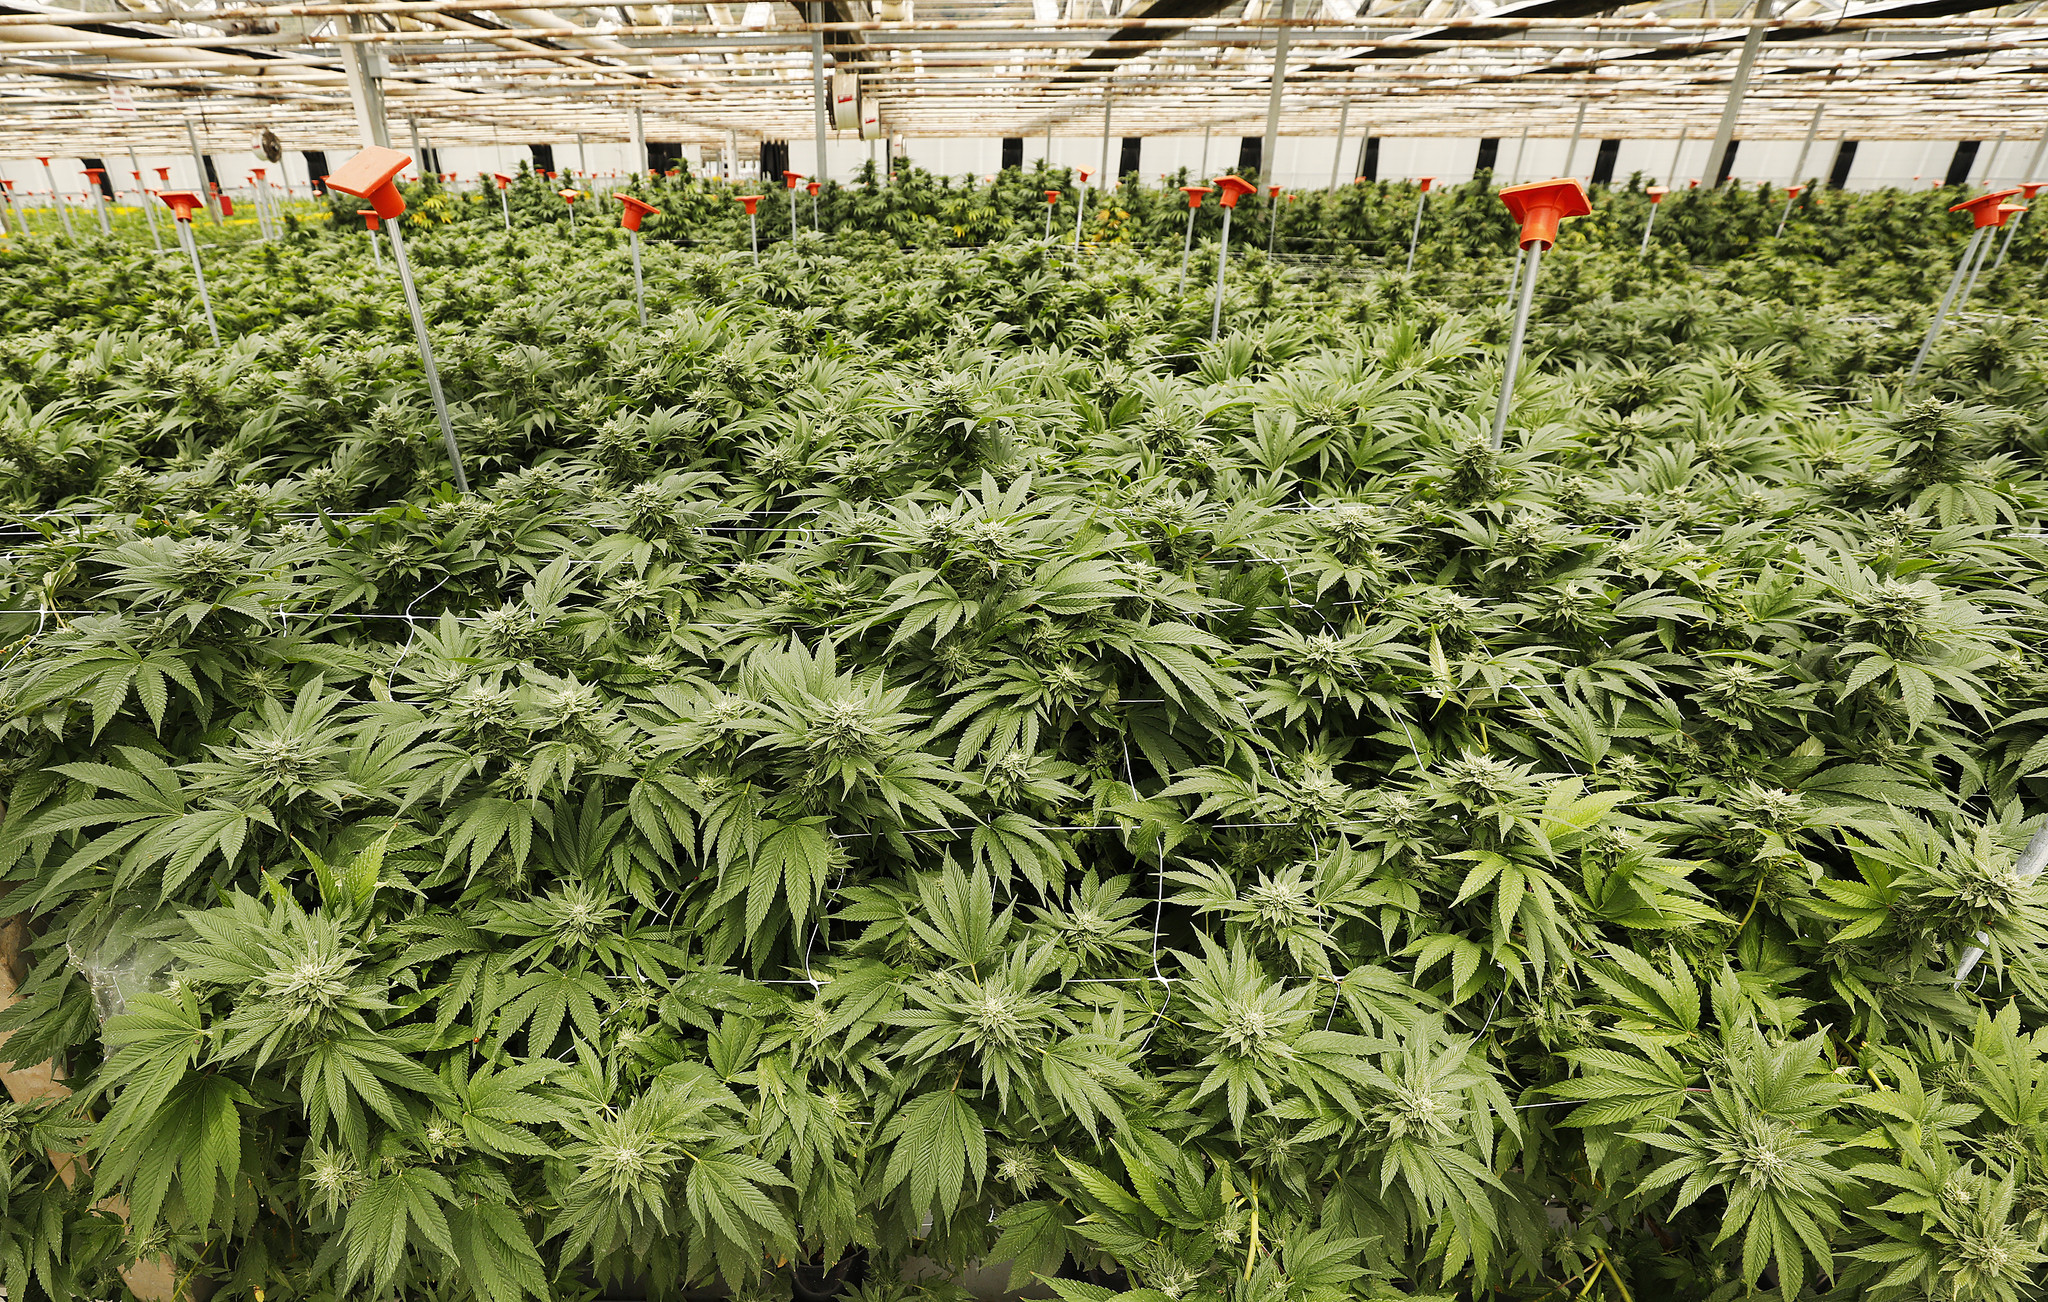 CARPINTERIA, CA - MAY 06, 2019 -Marijuana growing in a steel-frame greenhouse at Brand Farms in Carp